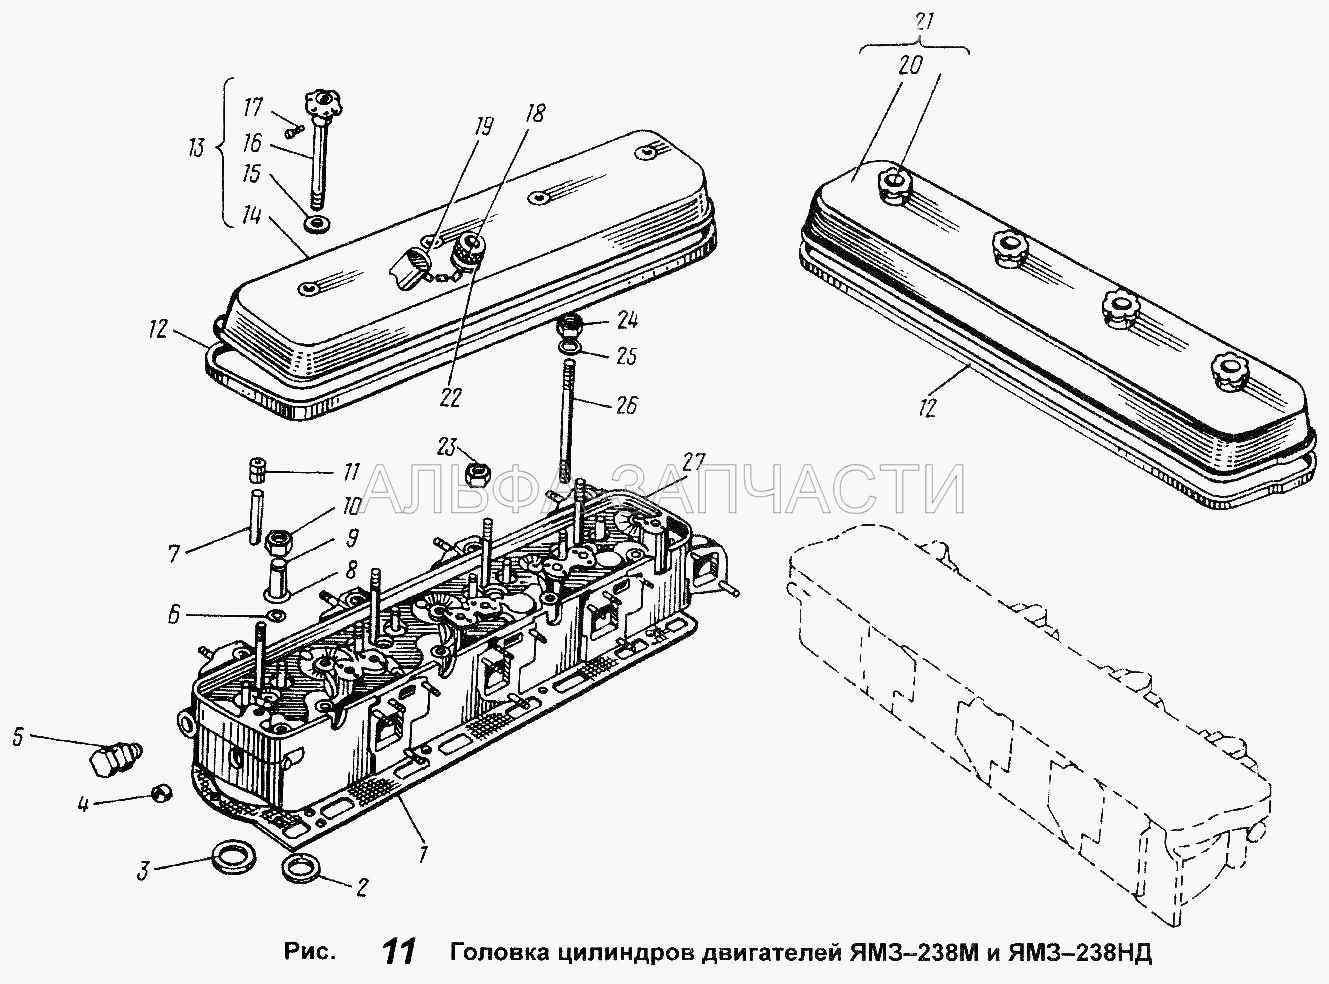 Головка цилиндров двигателей ЯМЗ-238М и ЯМЗ-238НД (312399-П2 Шайба) 